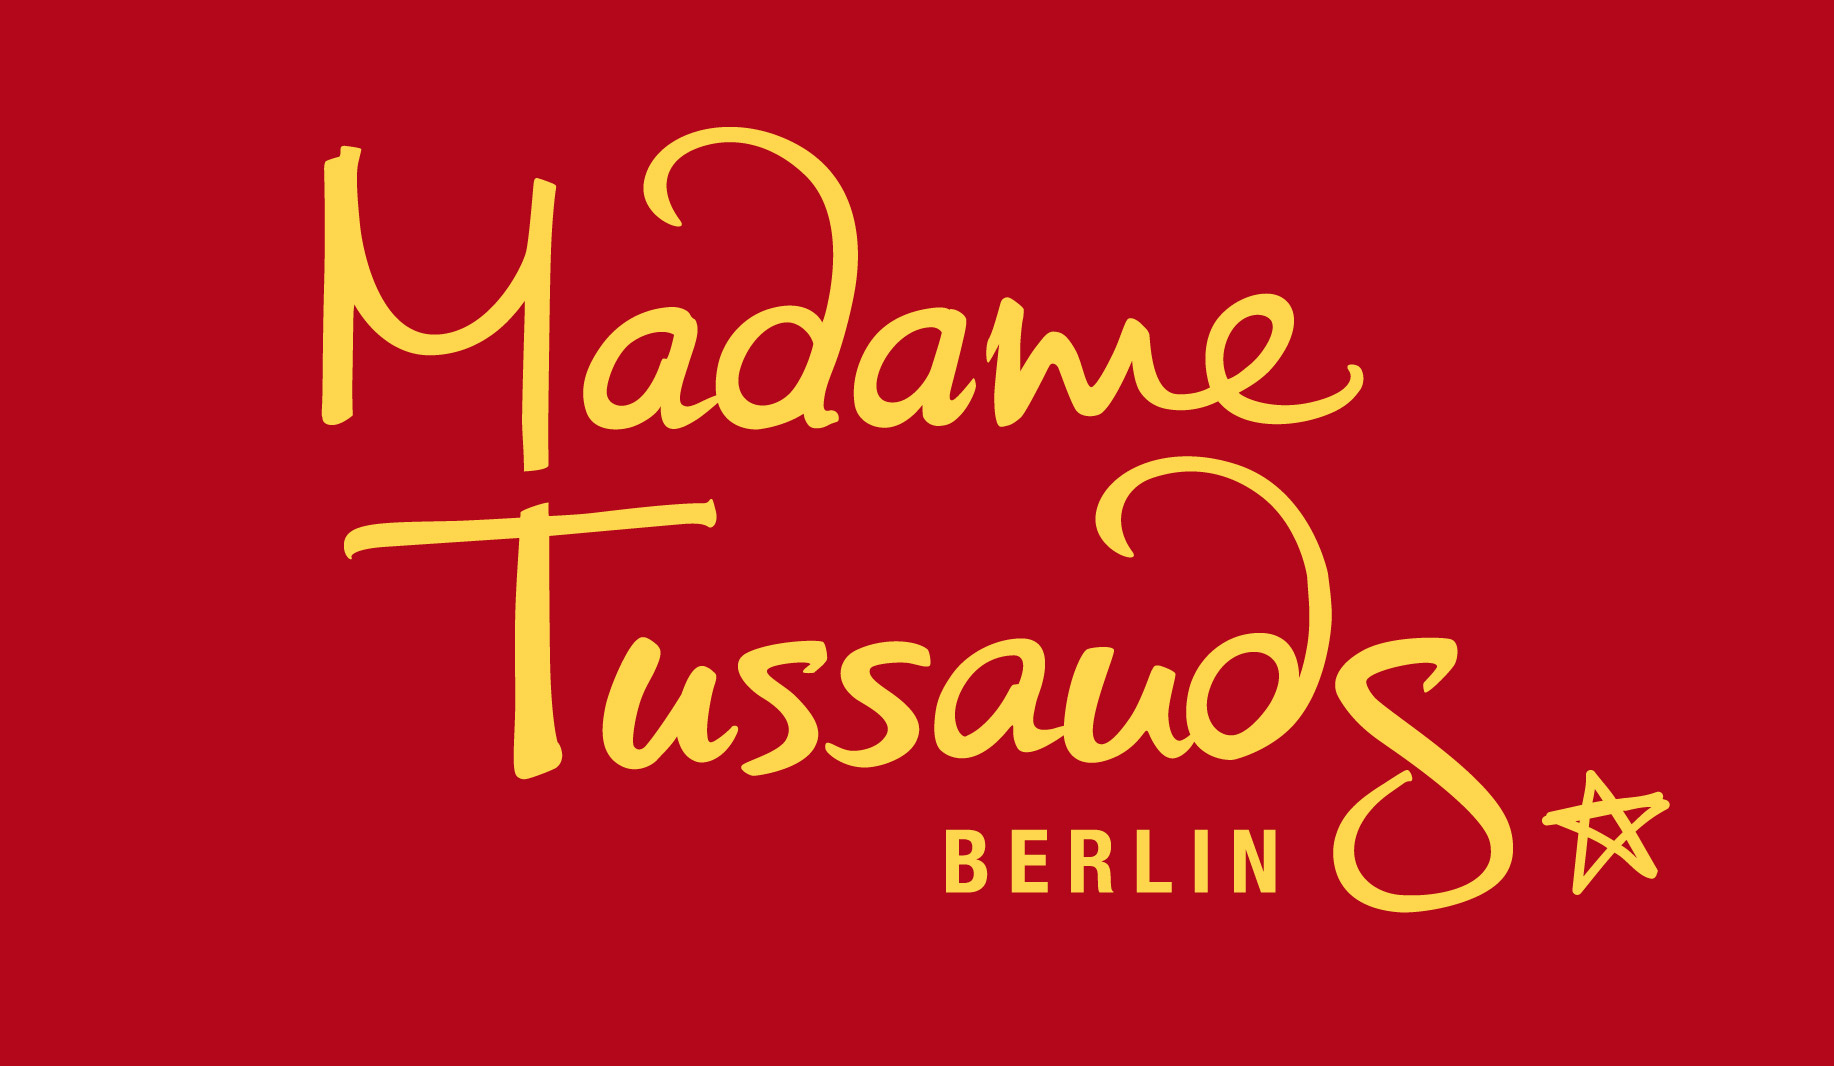 Madame Tussauds Berlin Logo.jpg